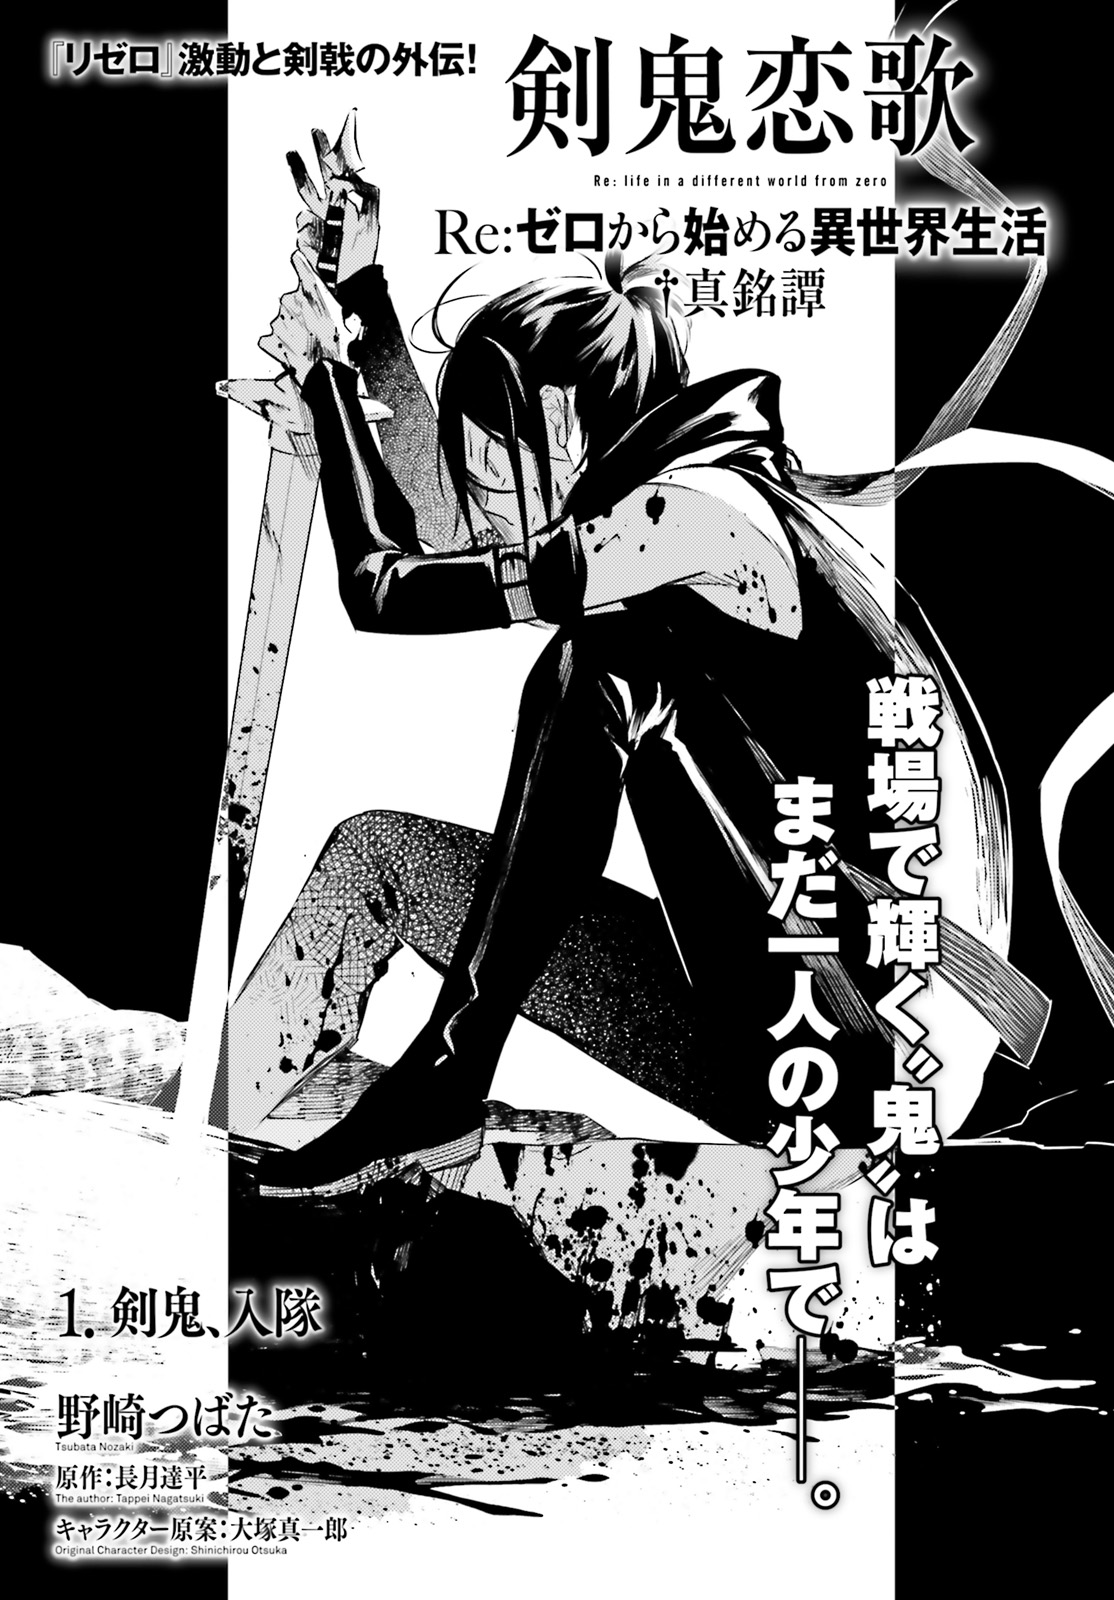 Re: Zero Kara Hajimeru Isekai Seikatsu Kenki Koiuta Vol. 1 Ch. 1 Sword Demon, Enlistment.